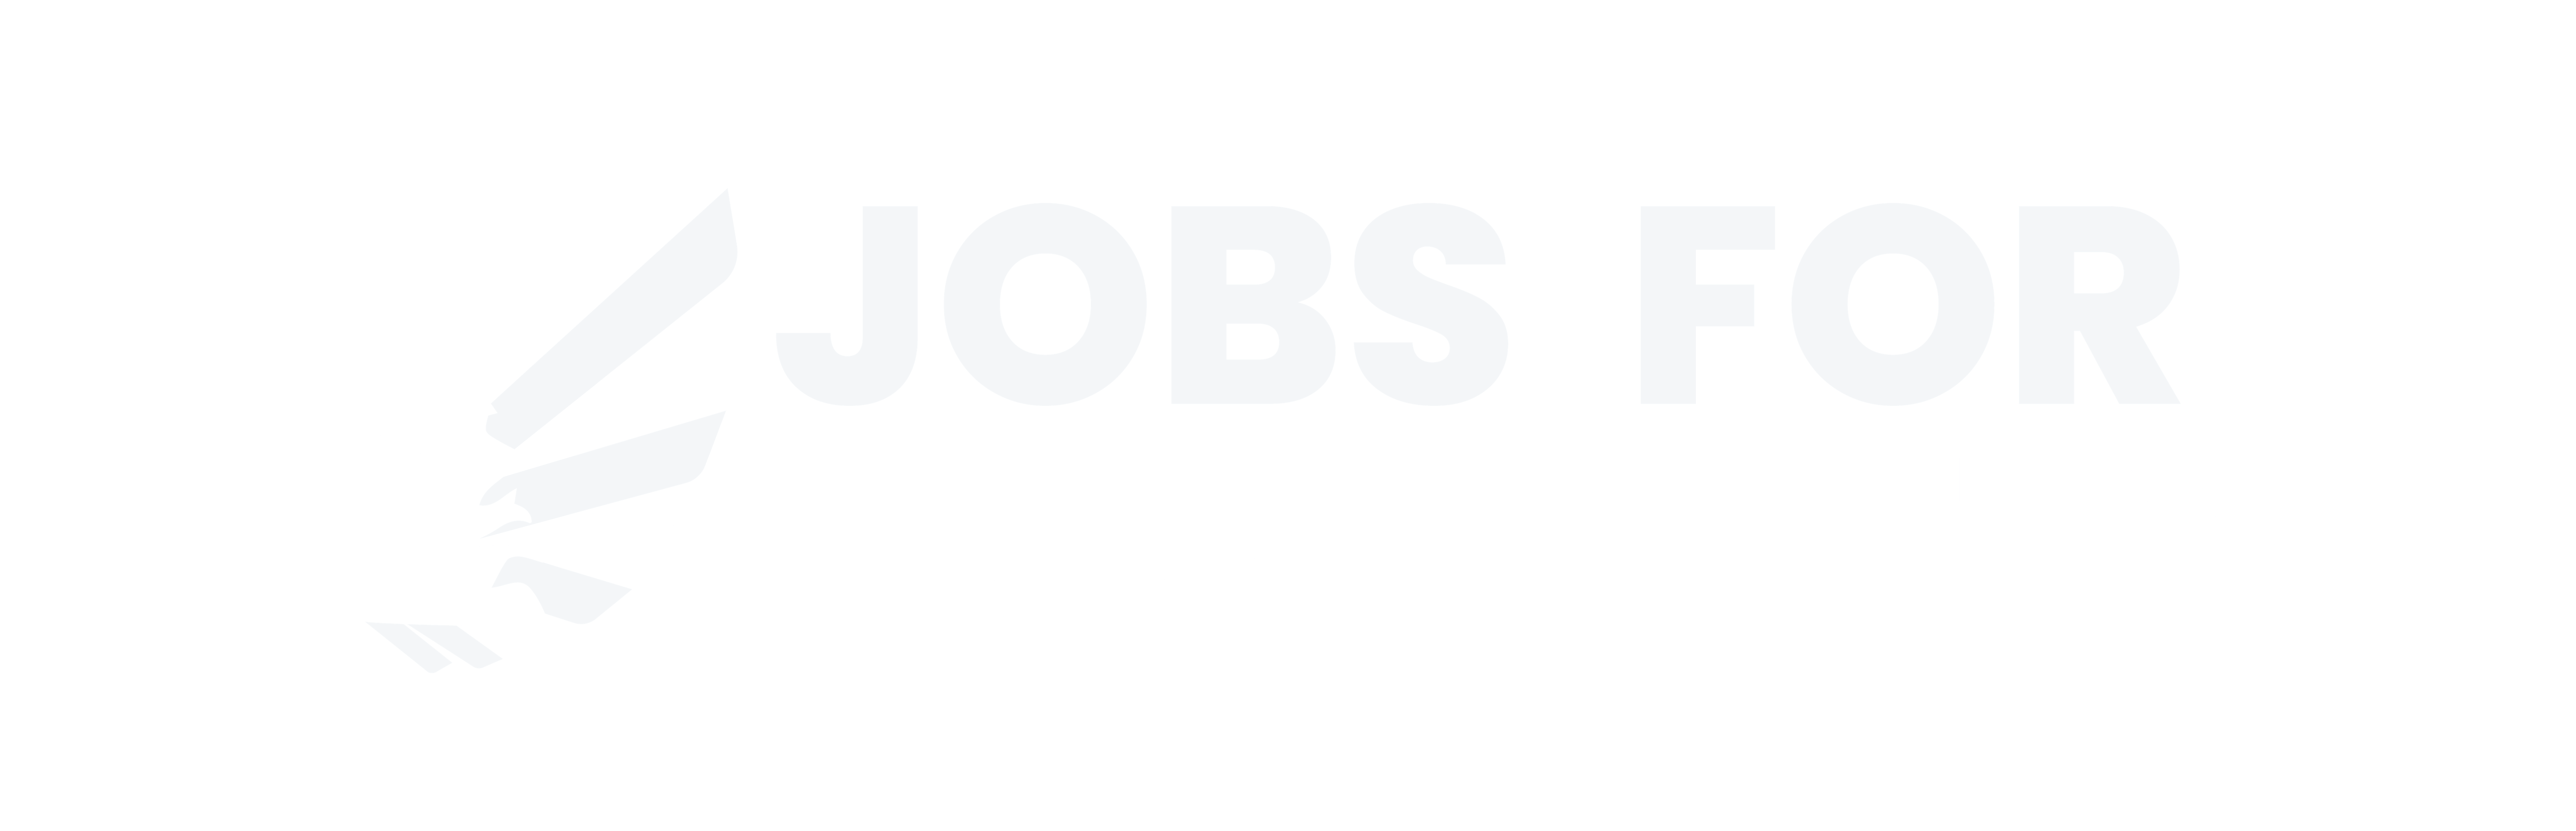 Jobs For Humanity Logo White